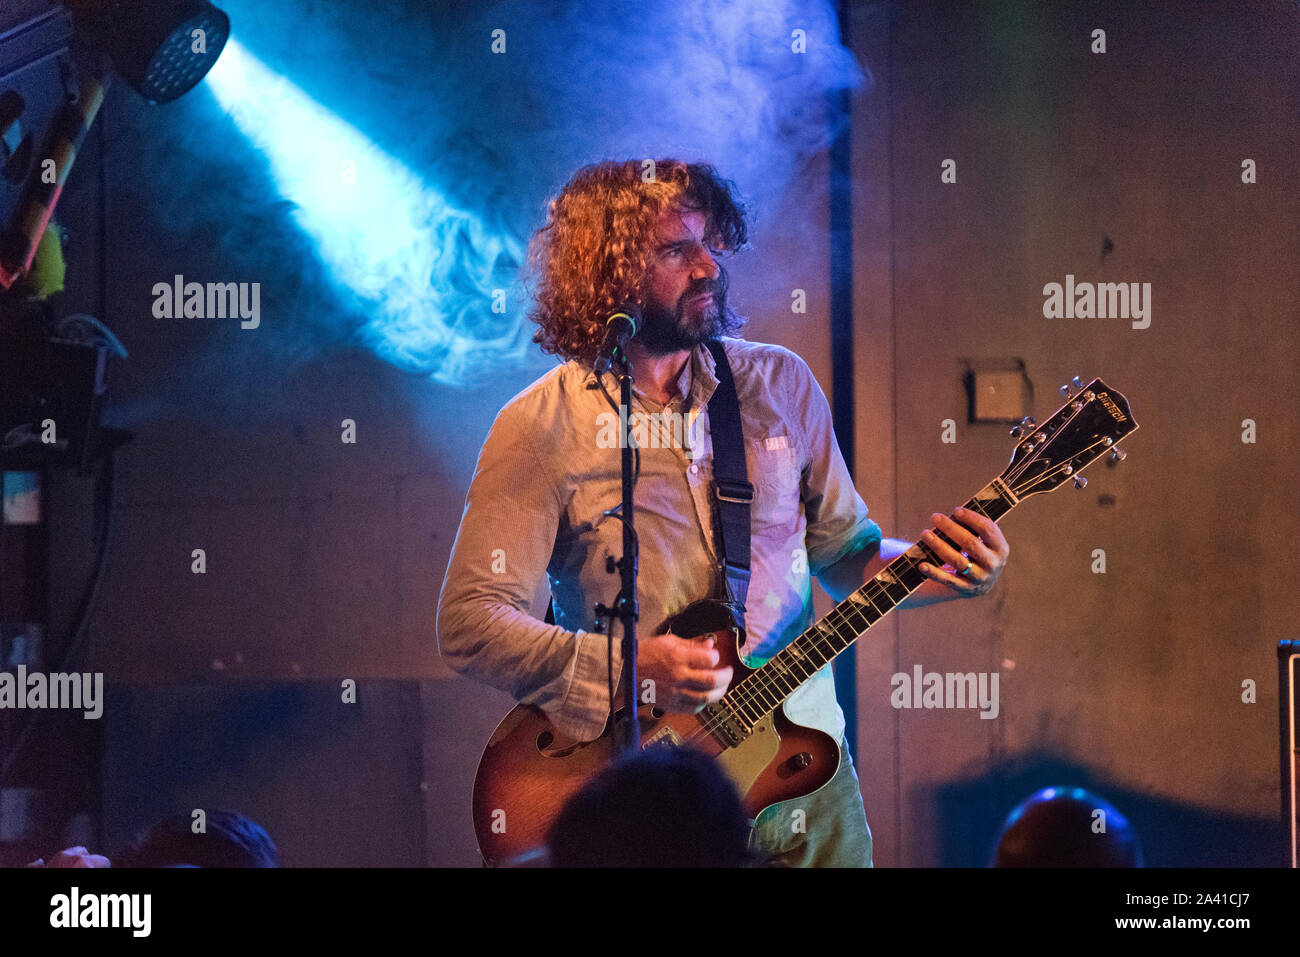 Brudenell Social Club, Leeds, UK. 3rd October 2019. US indie band Sebadoh in concert. Lou Barlow singer and guitarist. Stock Photo